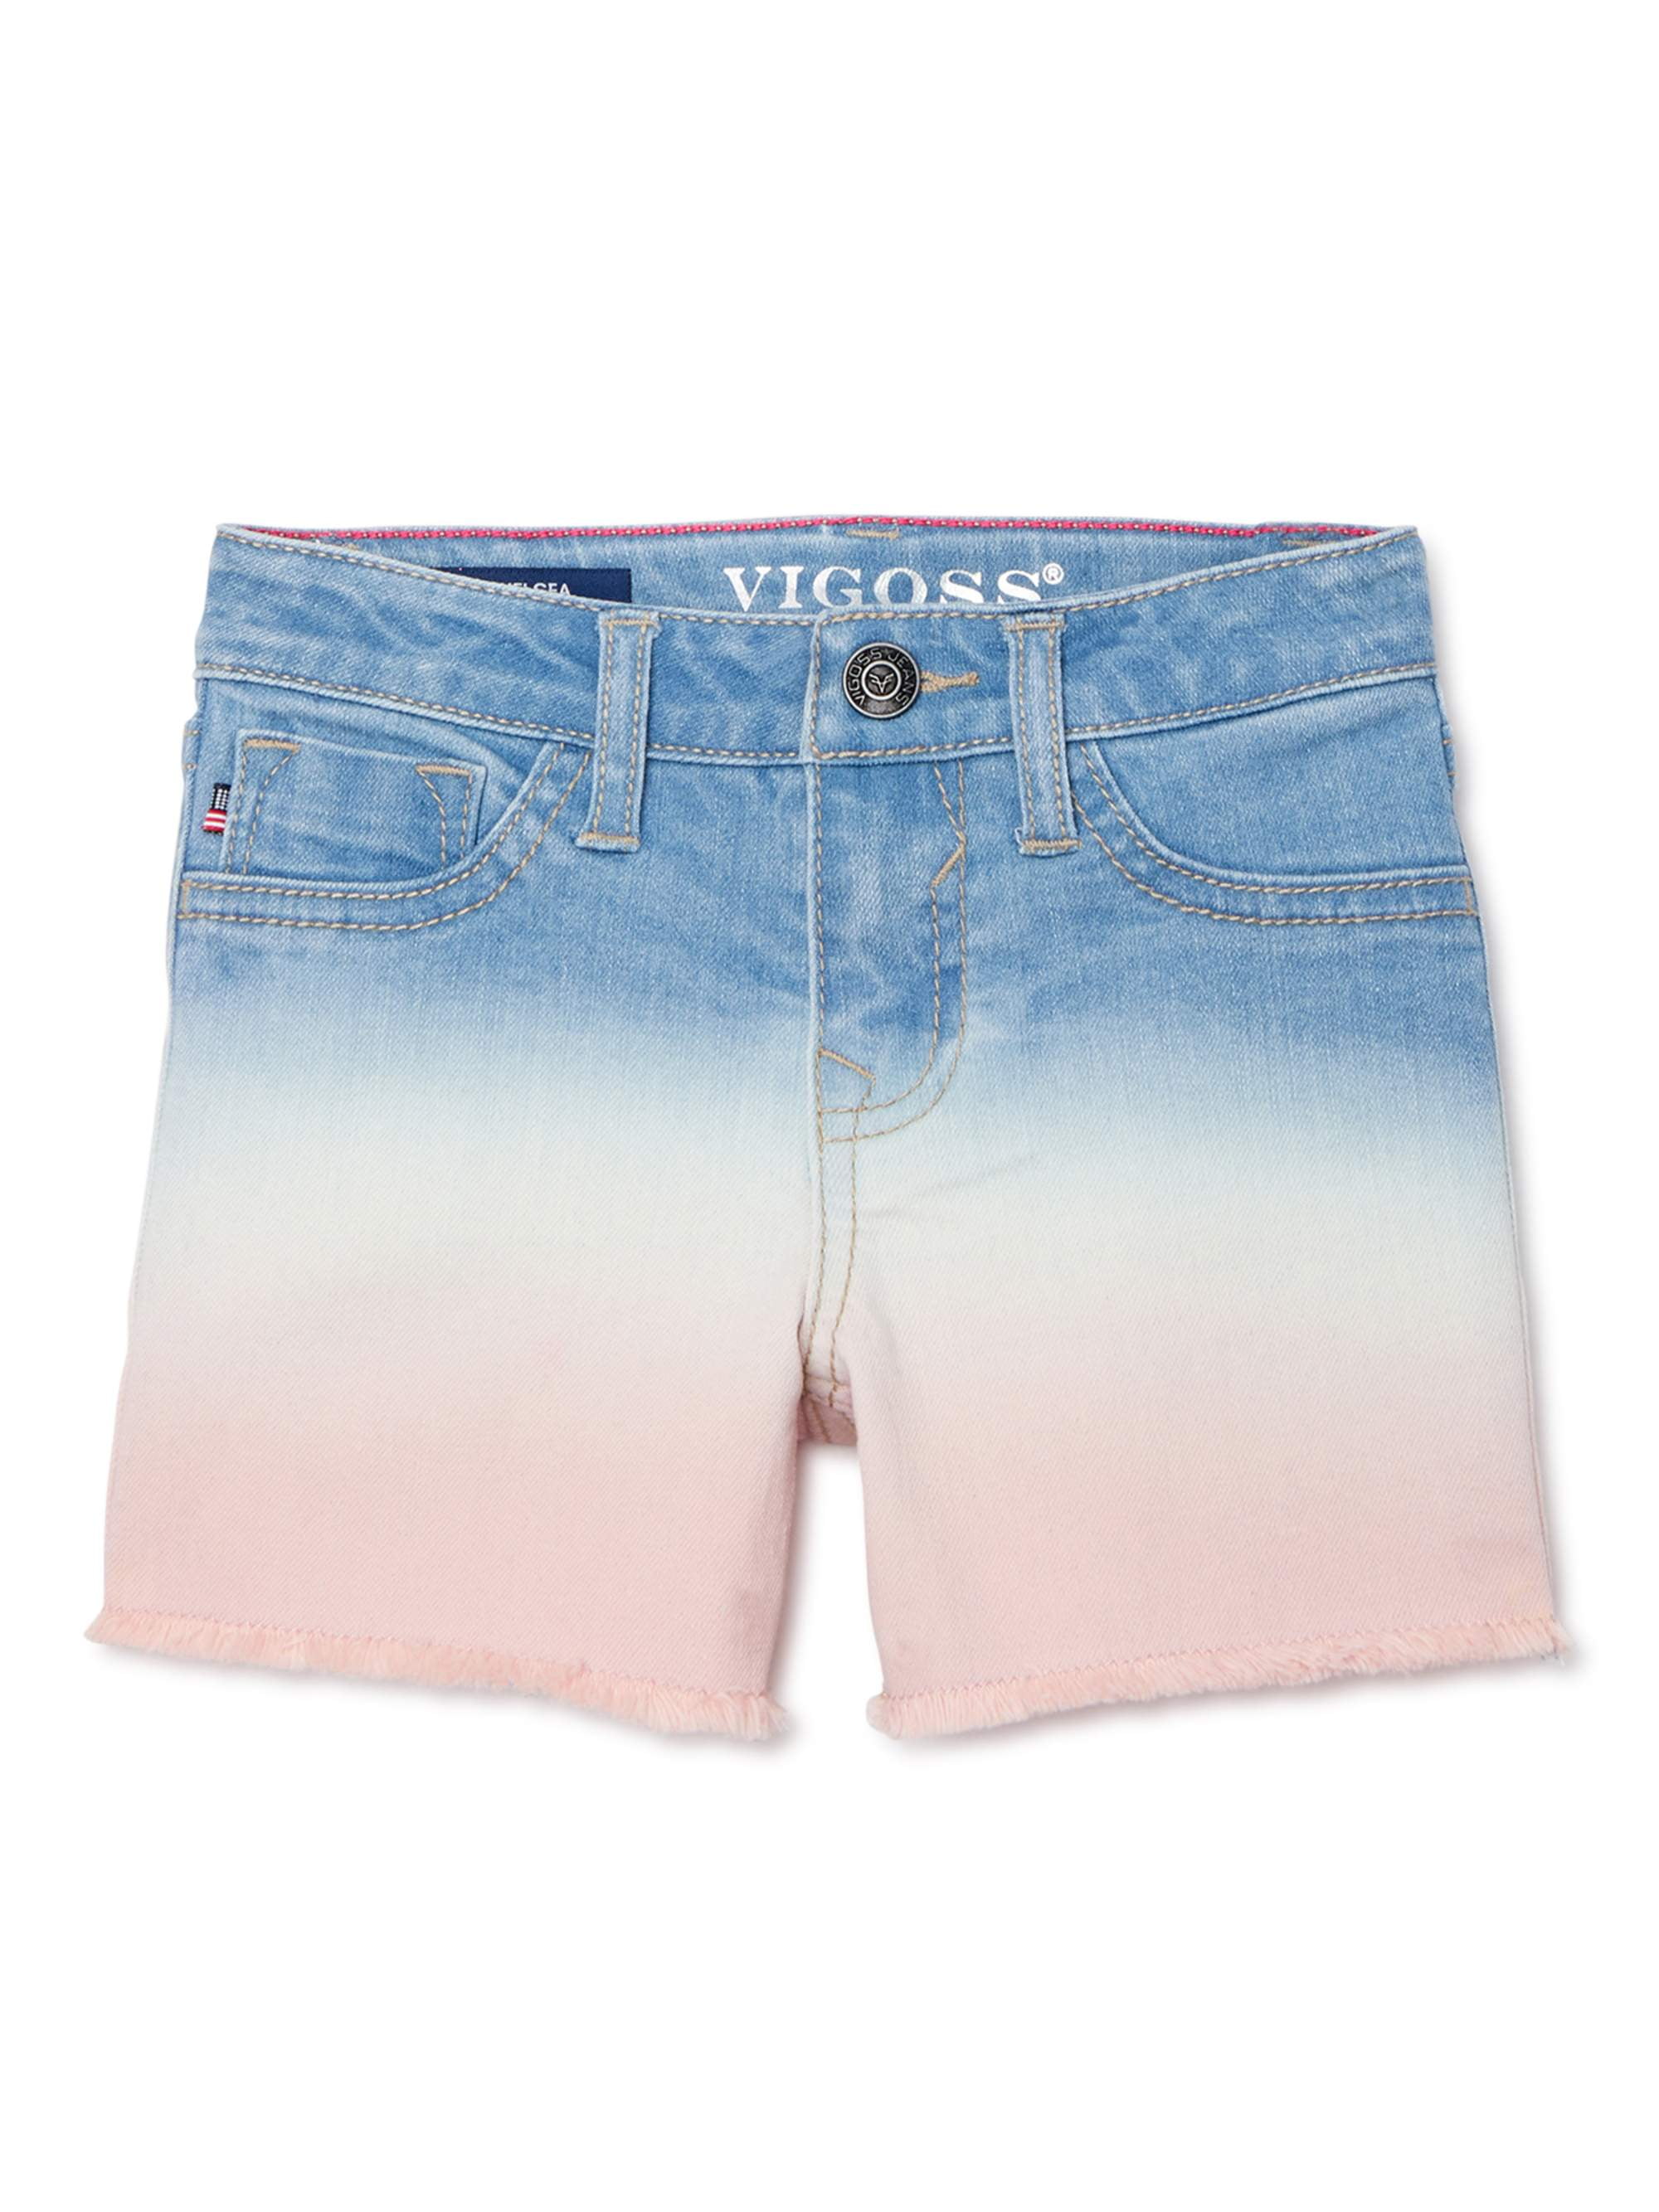 Vigoss Girls Ombre Tie Dye Frayed Hem Denim Jean Shorts Sizes 4 14